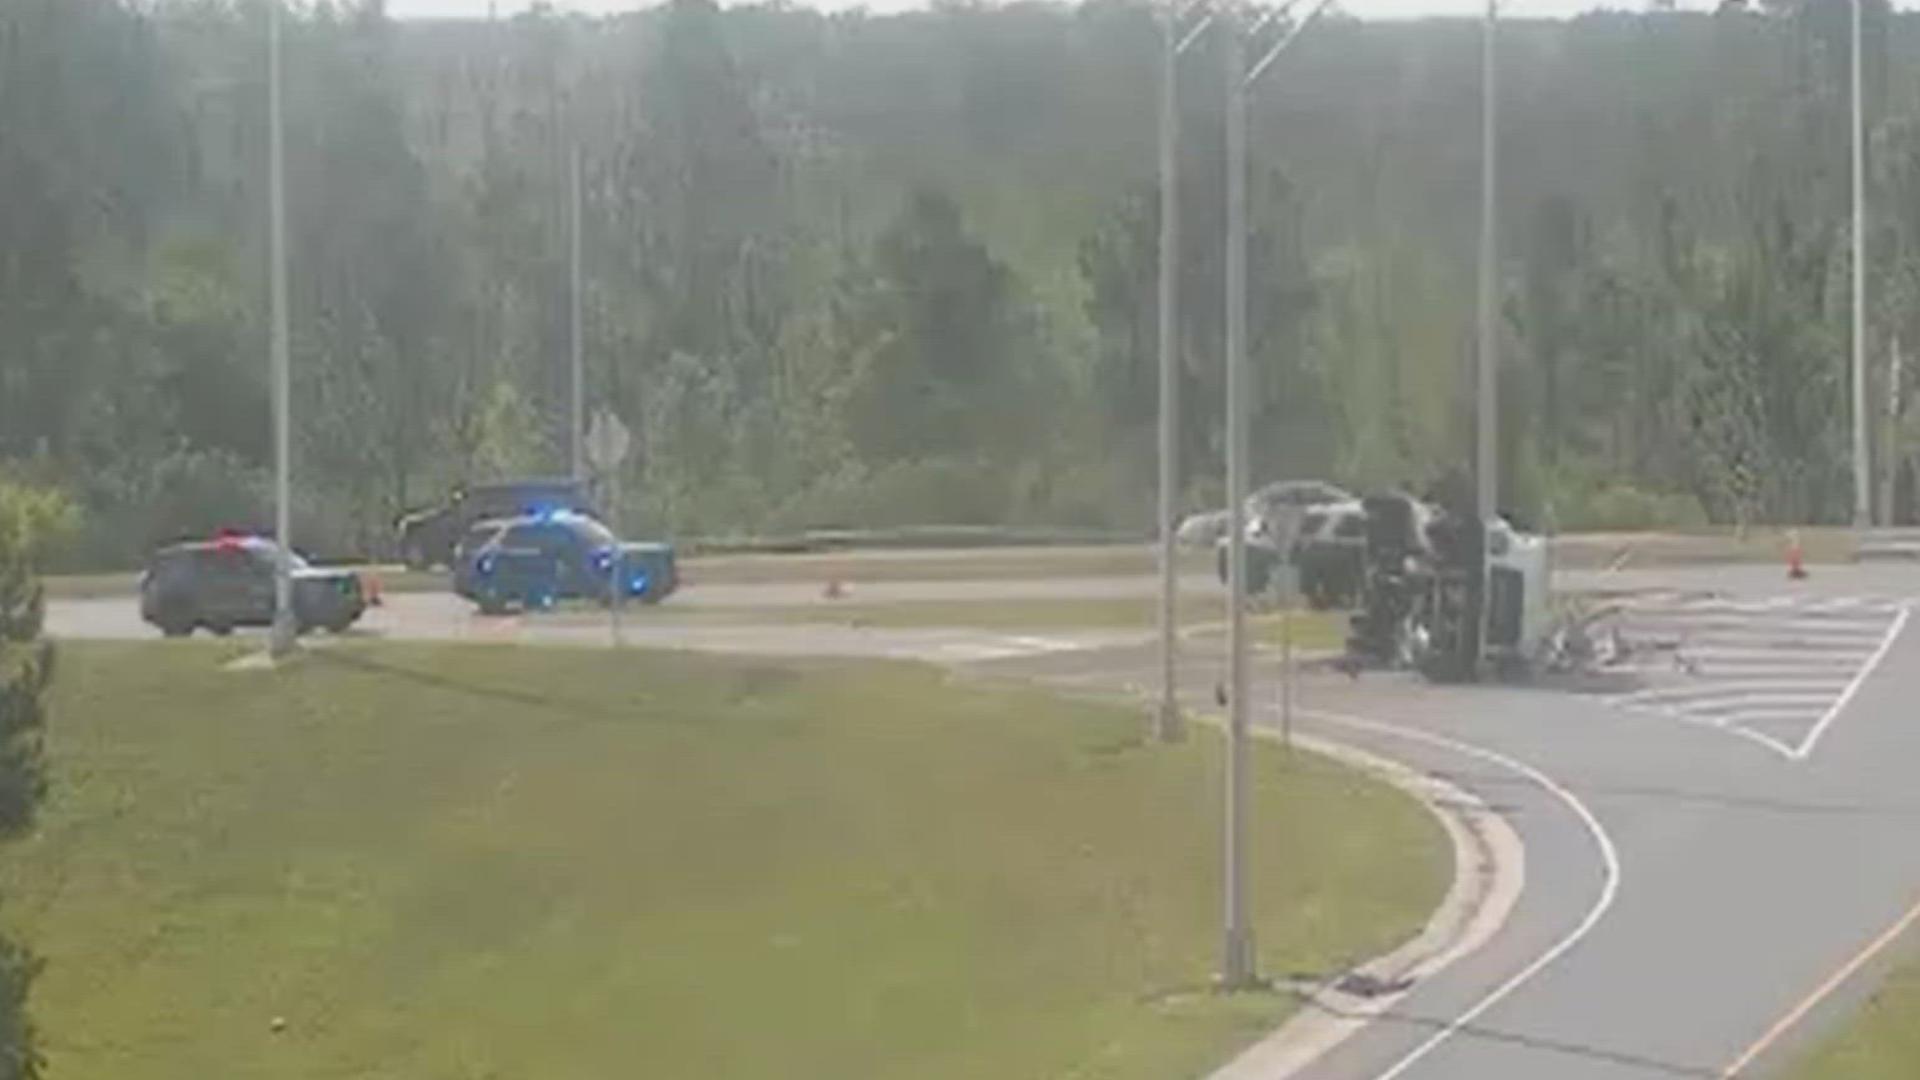 The crash happened around 1:48 p.m. Saturday, according to the Florida Highway Patrol.